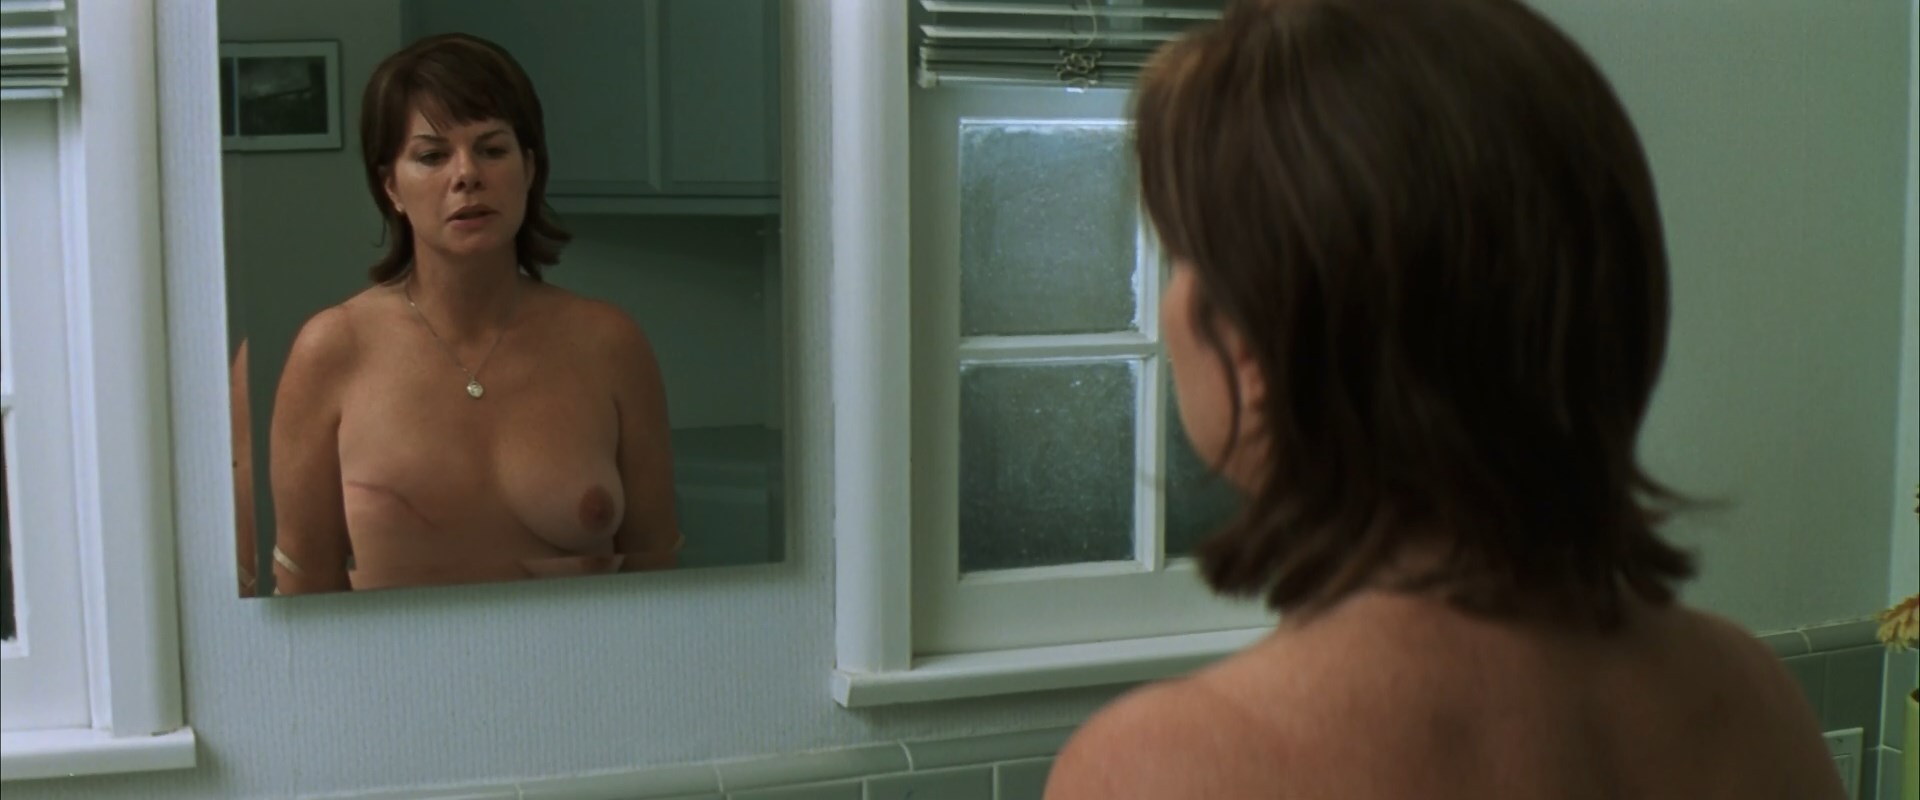 Marcia Gay Harden nude - Rails & Ties (2007)